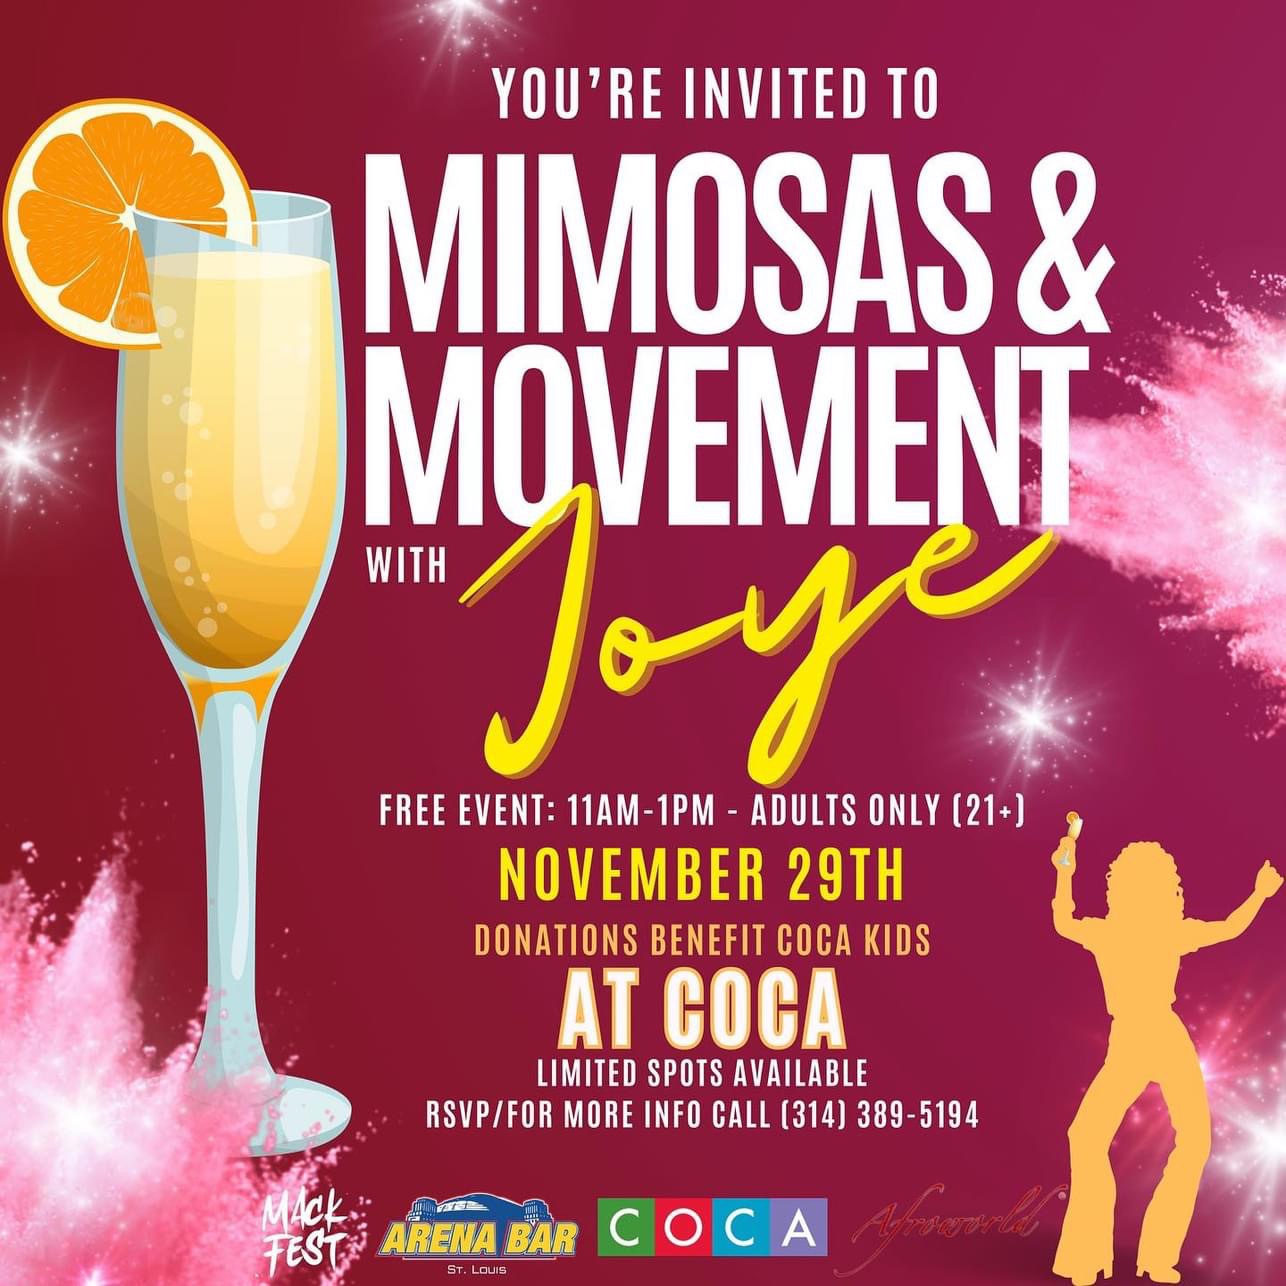 Mimosas & Movement with Joyce